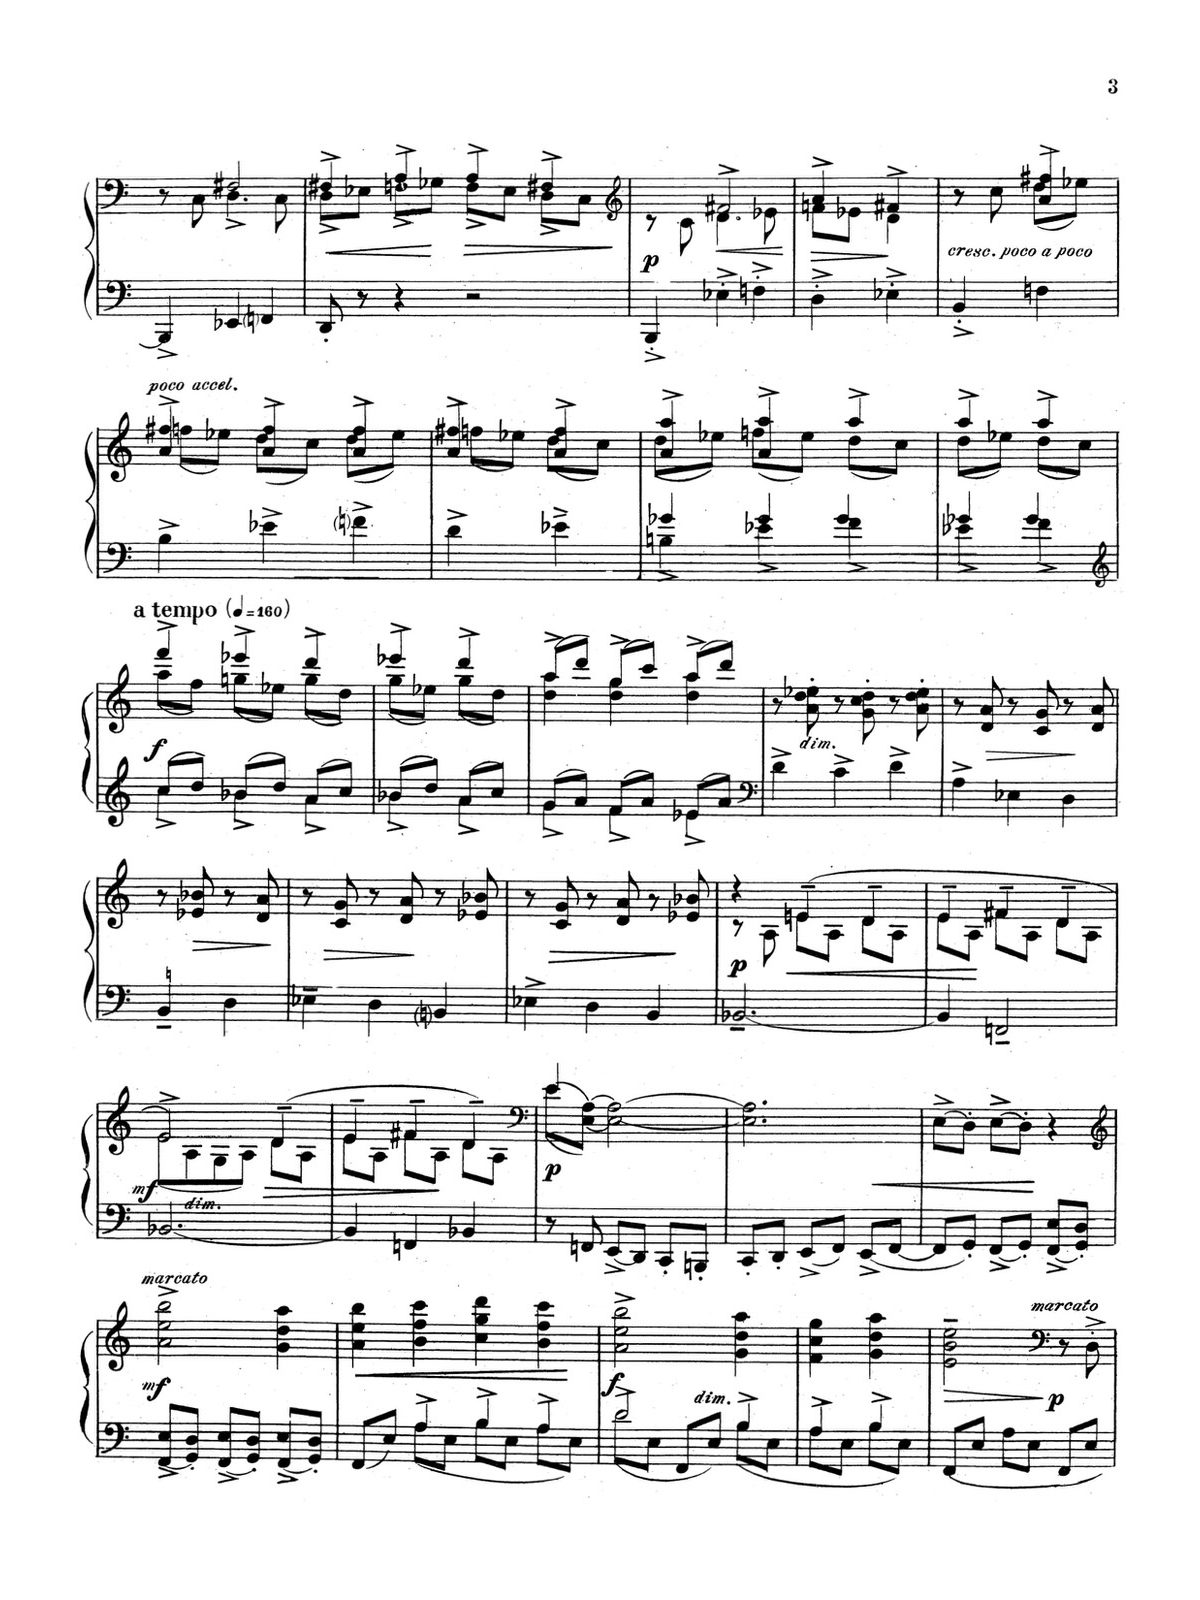 Bloch, Sonata-p05